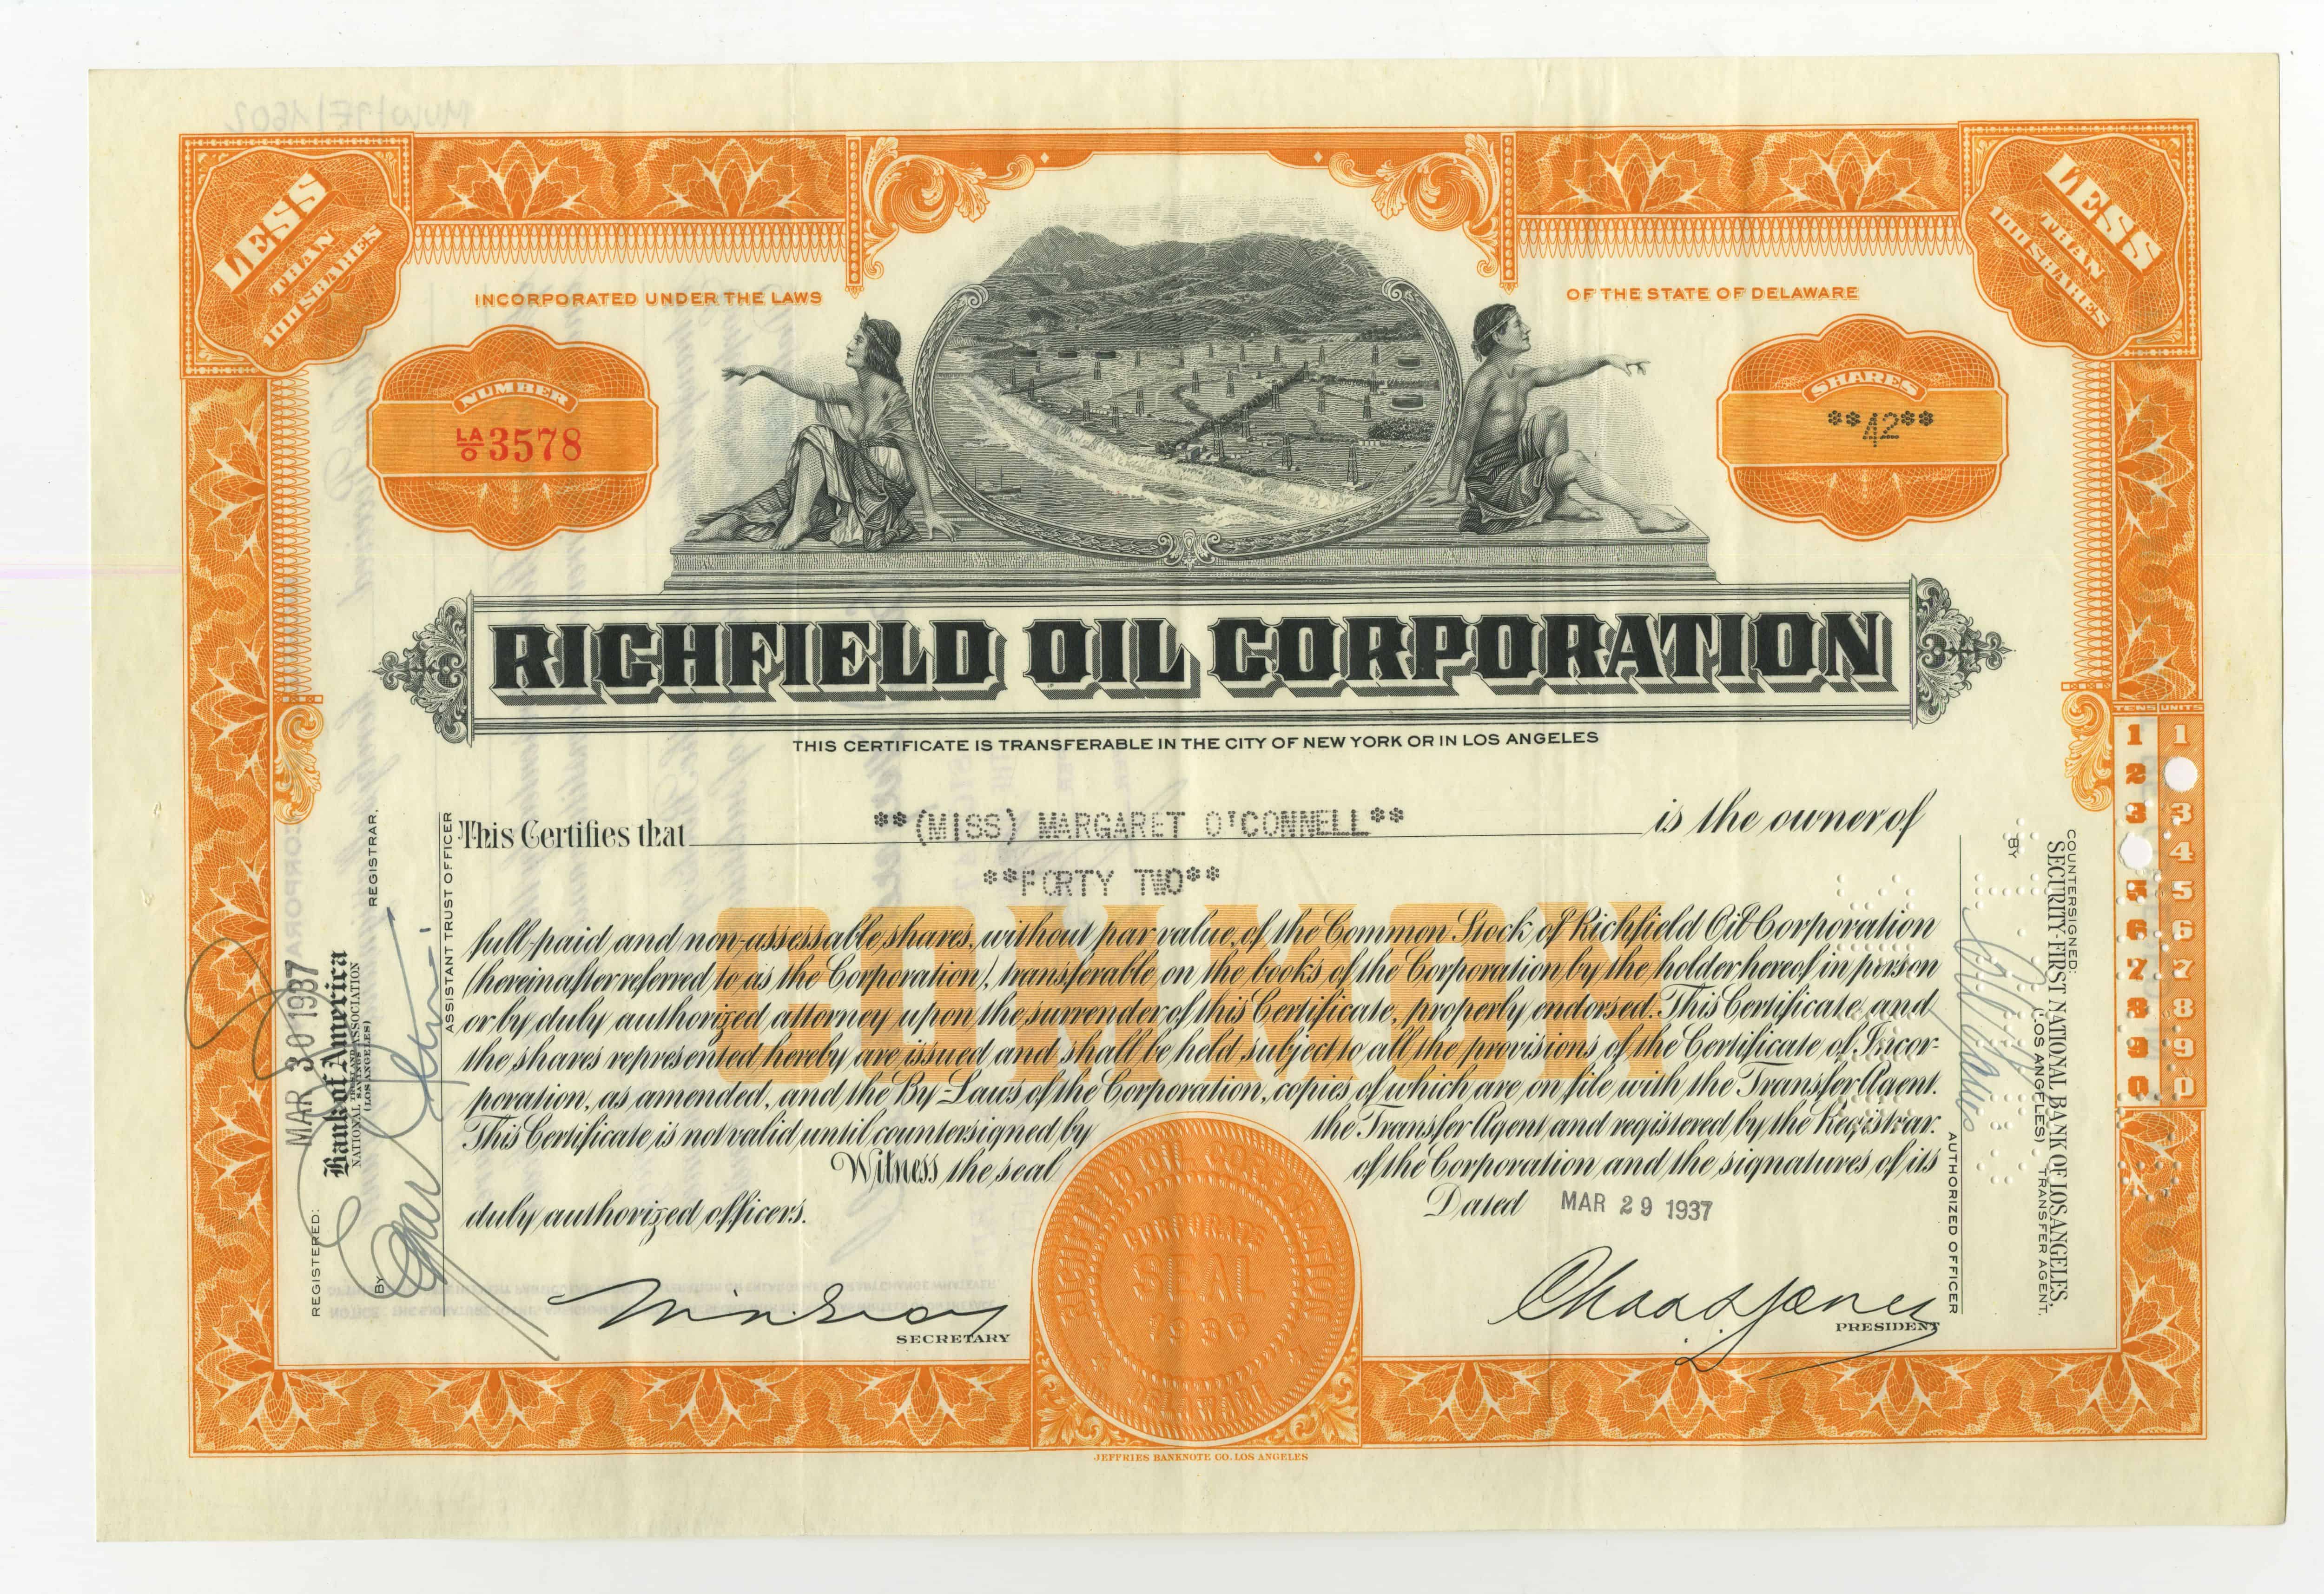 42 akcje spółki Richfield Oil Corporation z dnia 29 marca 1937 roku